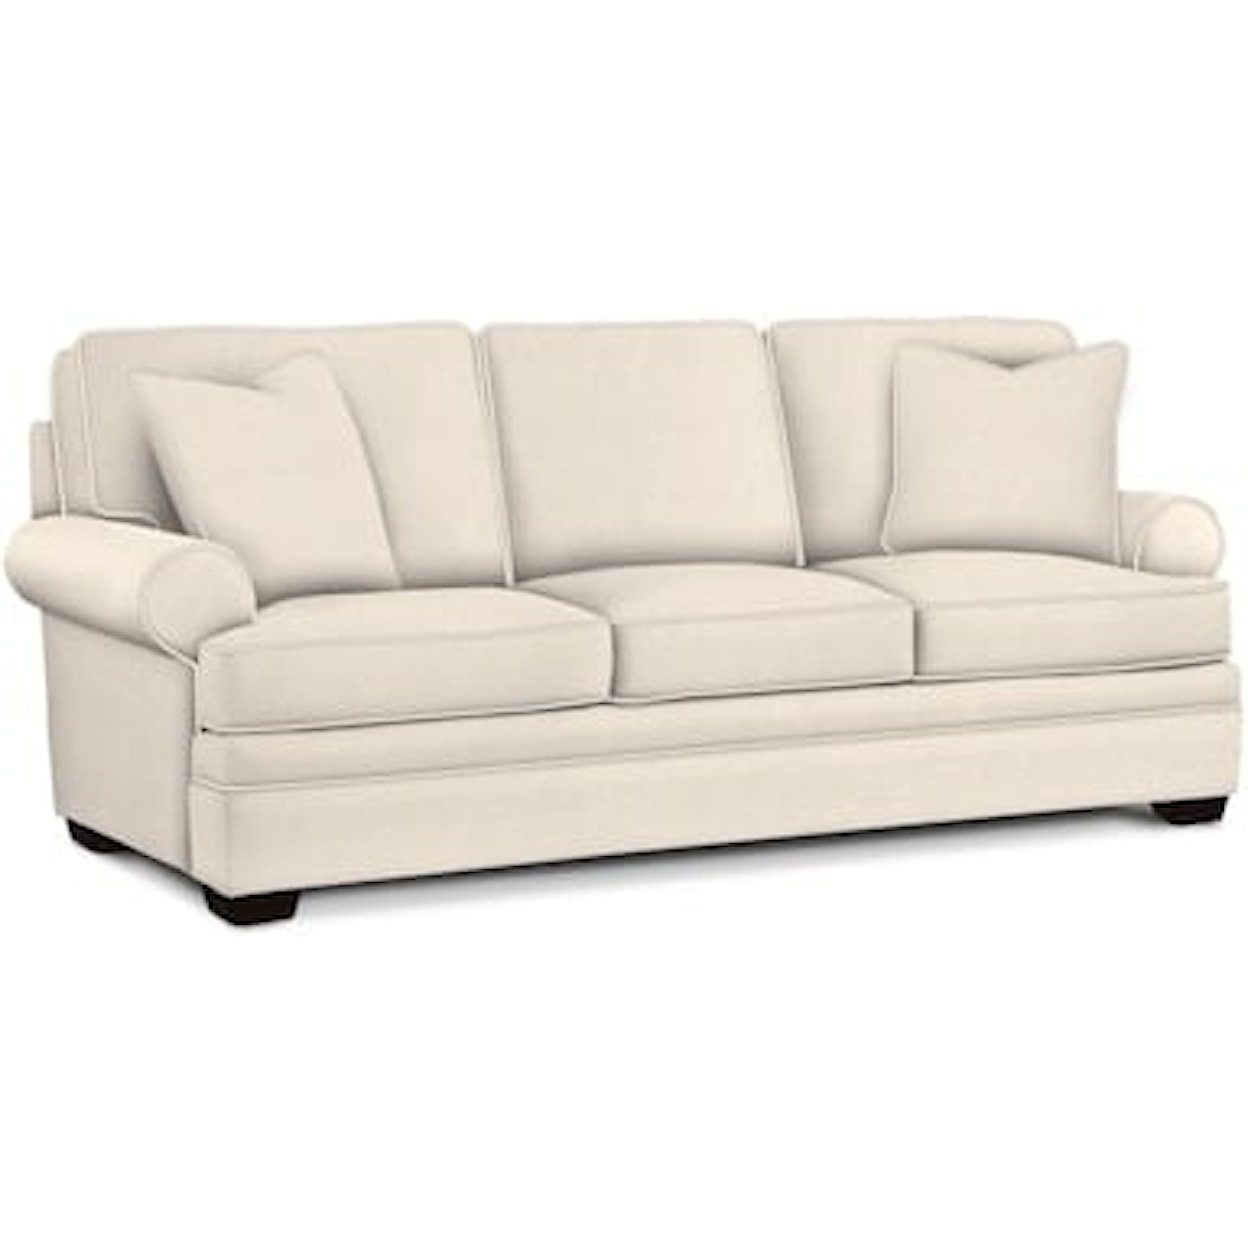 Braxton Culler Bradbury Customizable Sofa